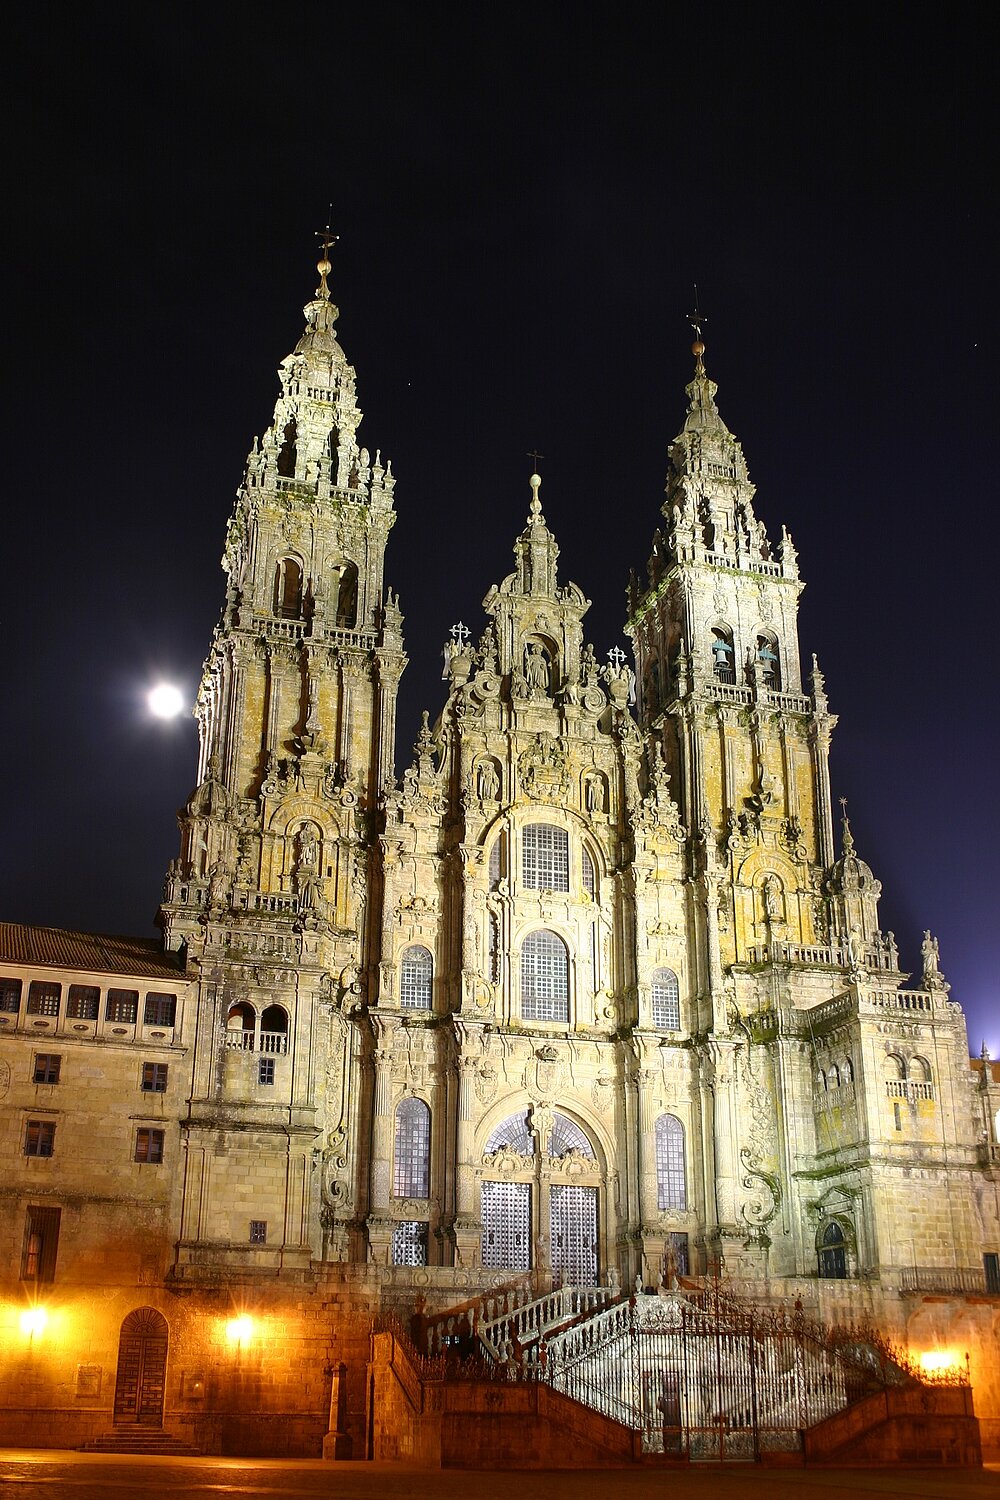 Santiago de Compostela (c) wikimedia, YearoftheDragon